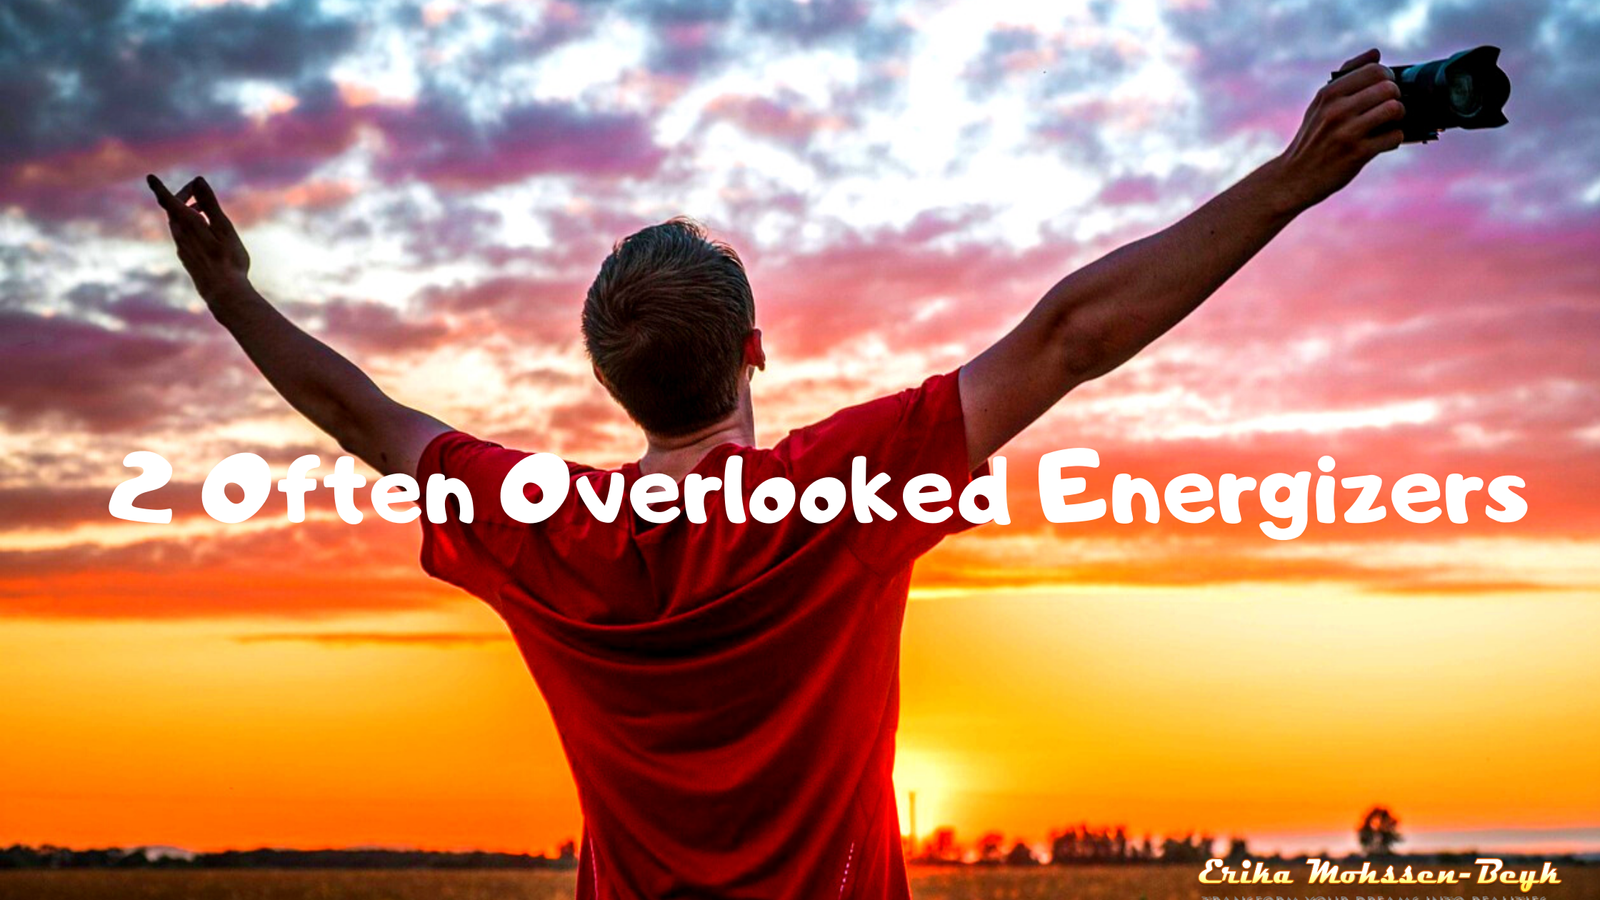 2 Often Overlooked Energizers